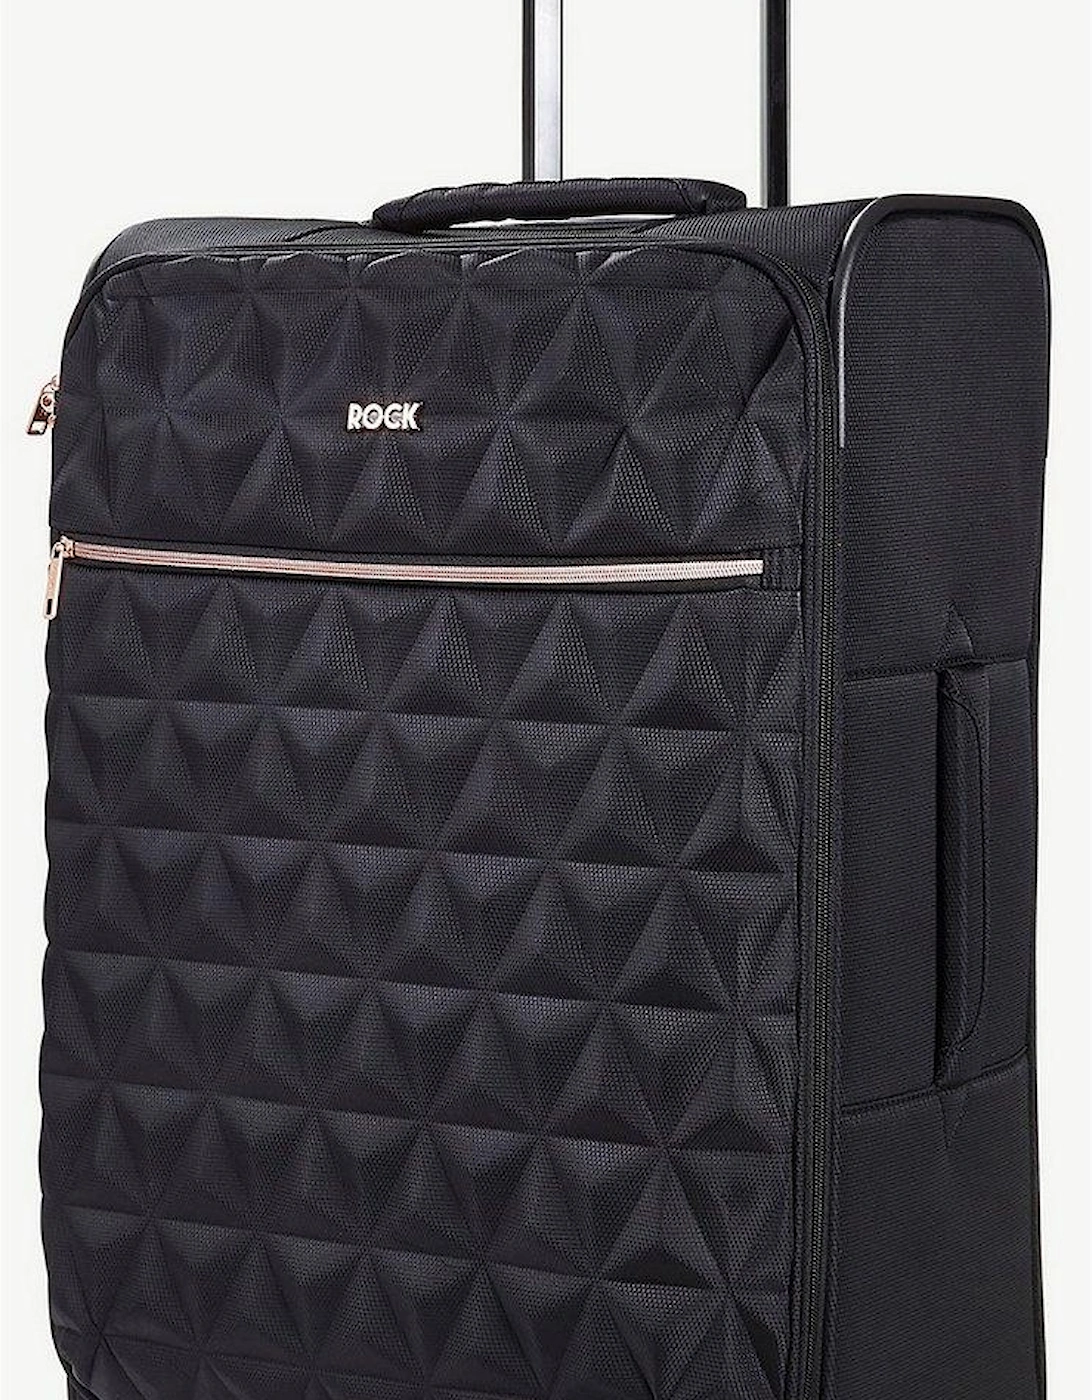 Jewel 4 Wheel Soft Medium Suitcase - Black, 2 of 1